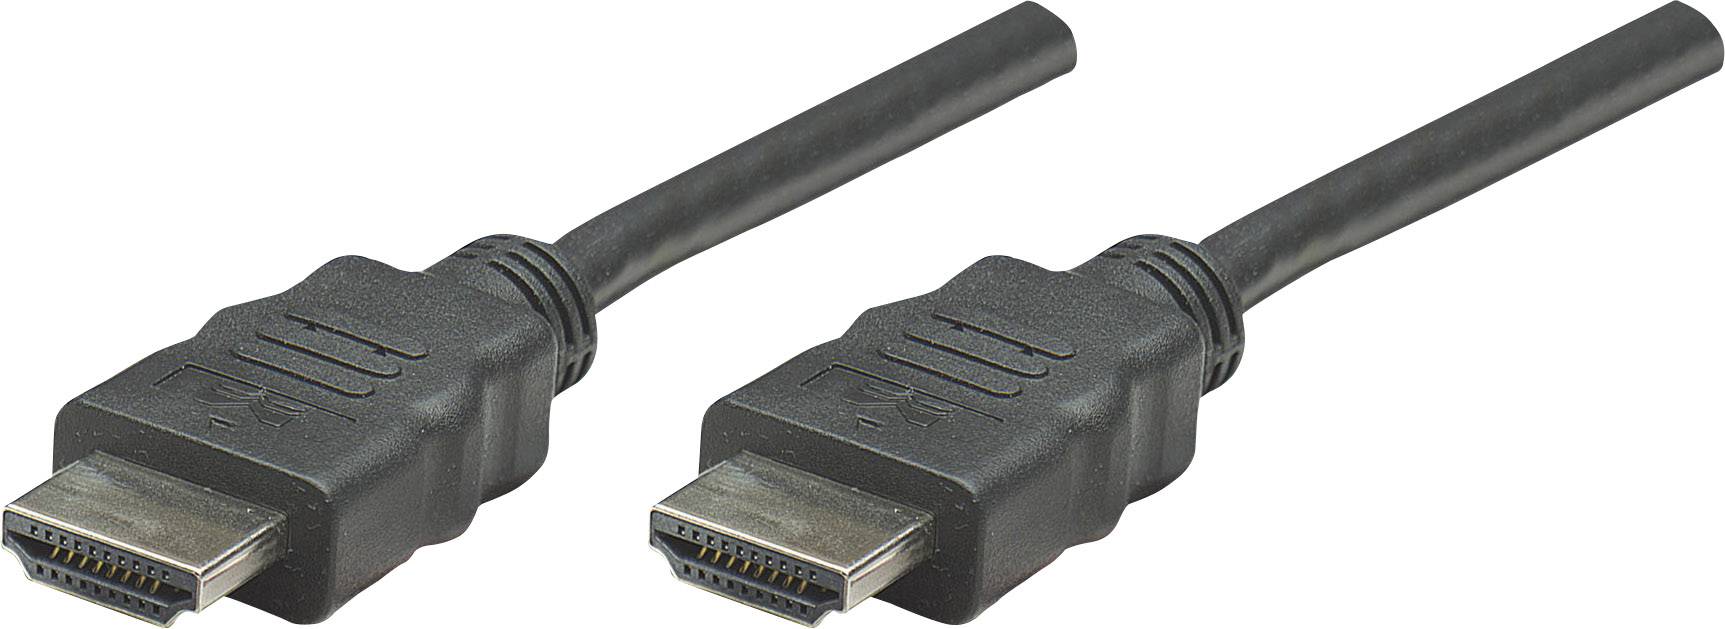 MANHATTAN HDMI 1.4 Kabel 19-pin MHP 2 x HDMI 19-pol. Stecker Vernickete Kontakte Vergossene PVC Stec